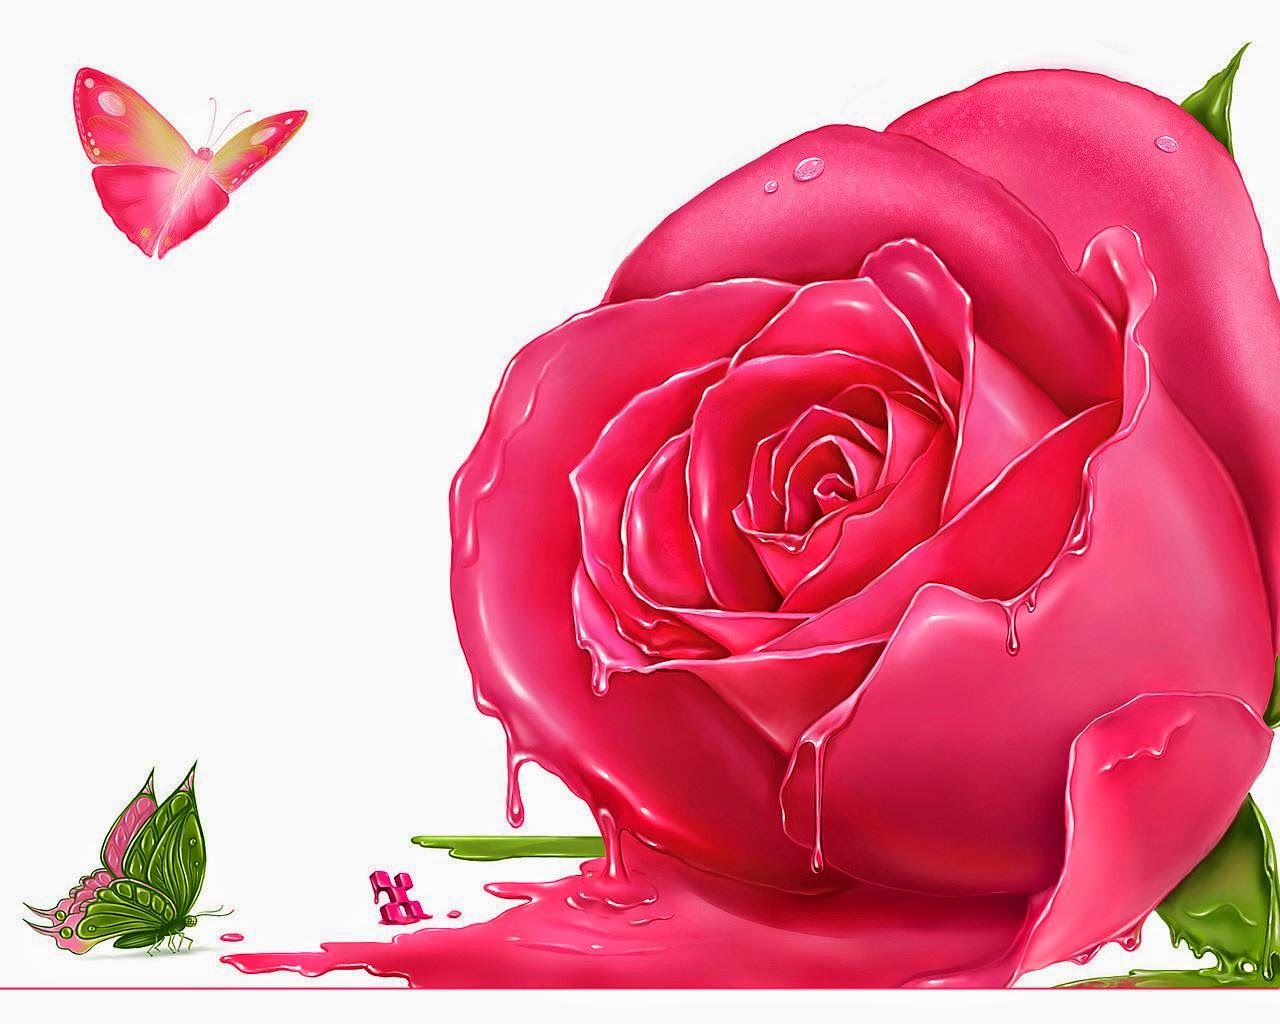 Flower Wallpaper: Beautiful Pink Rose Flowers Wallpaper With Butterfly